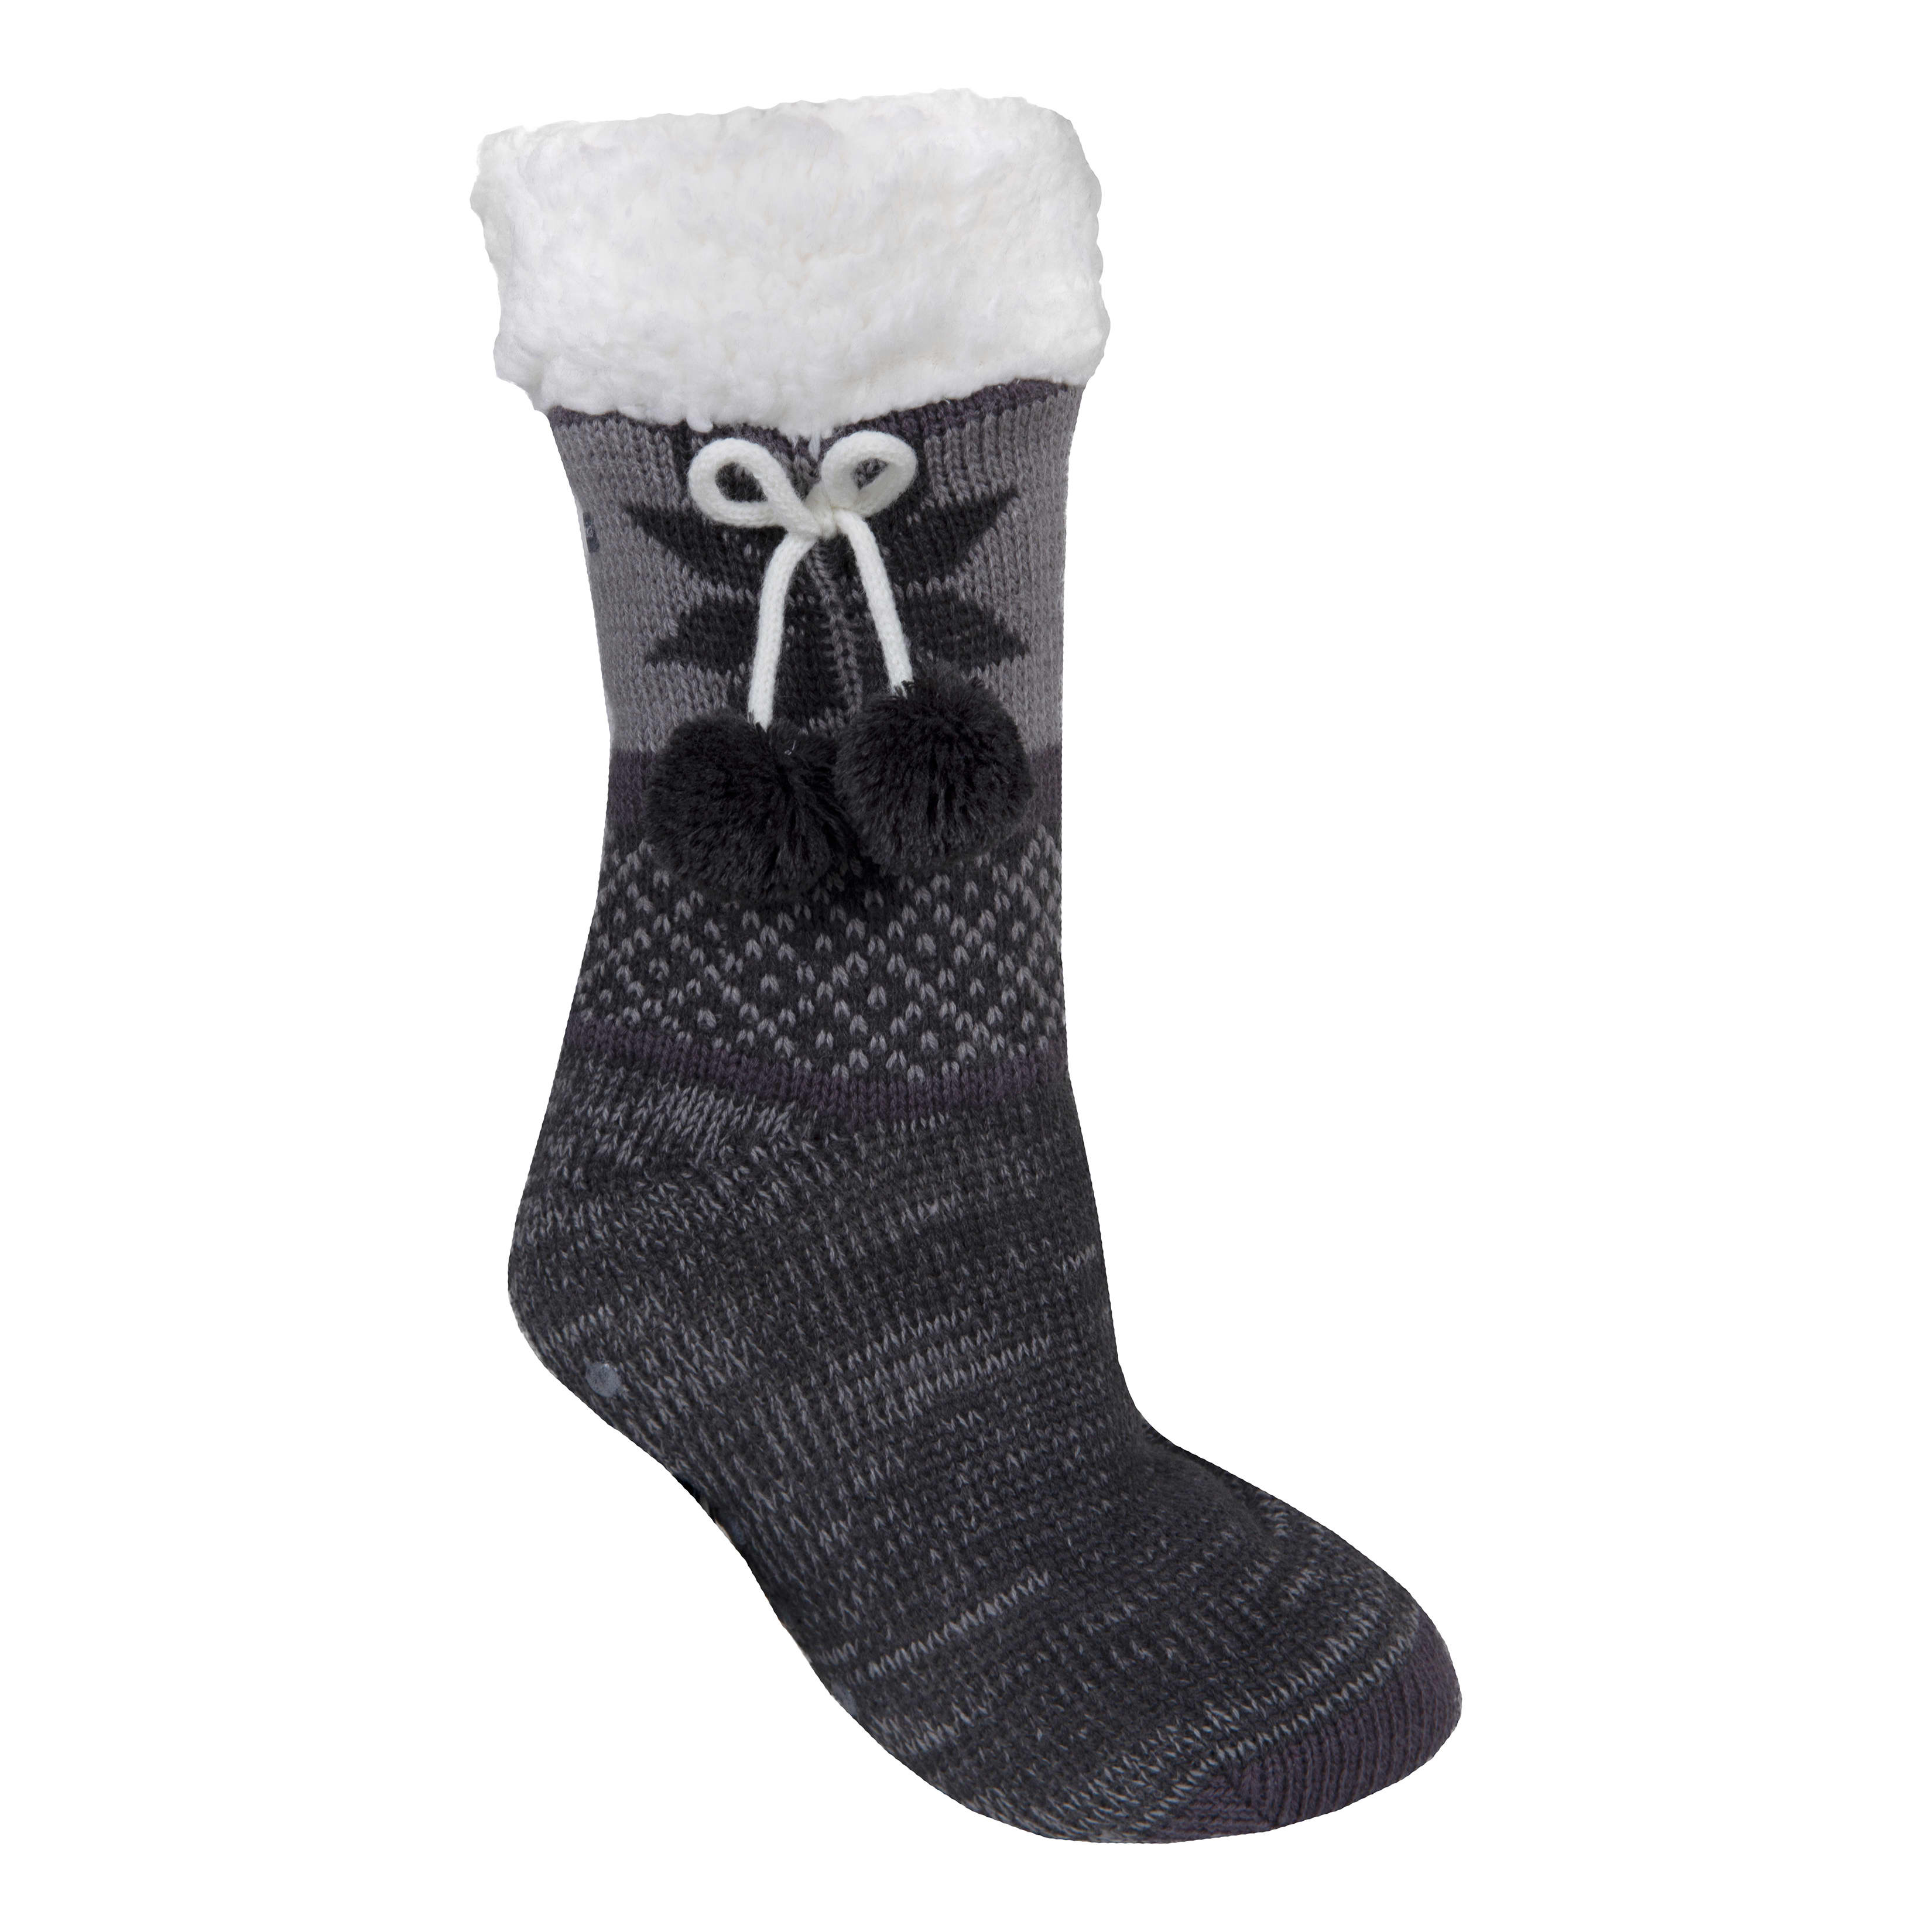 Columbia Women’s Crystal Moccasin Slipper Socks - Charcoal